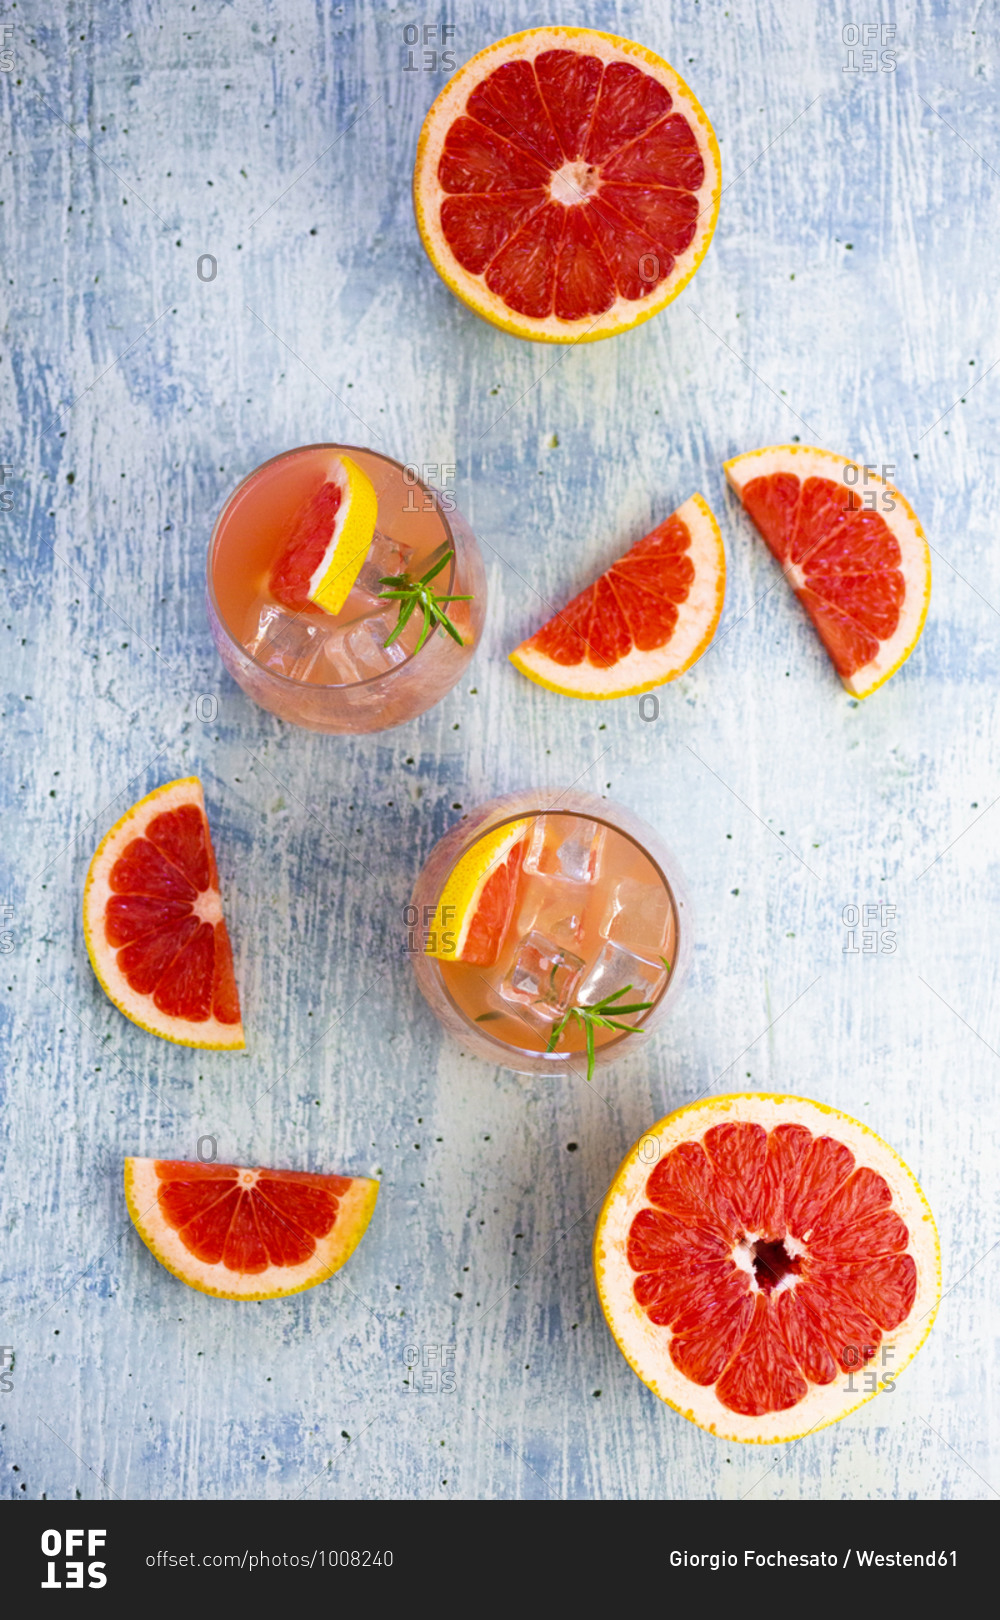 Glasses of fresh grapefruit juice and grapefruits